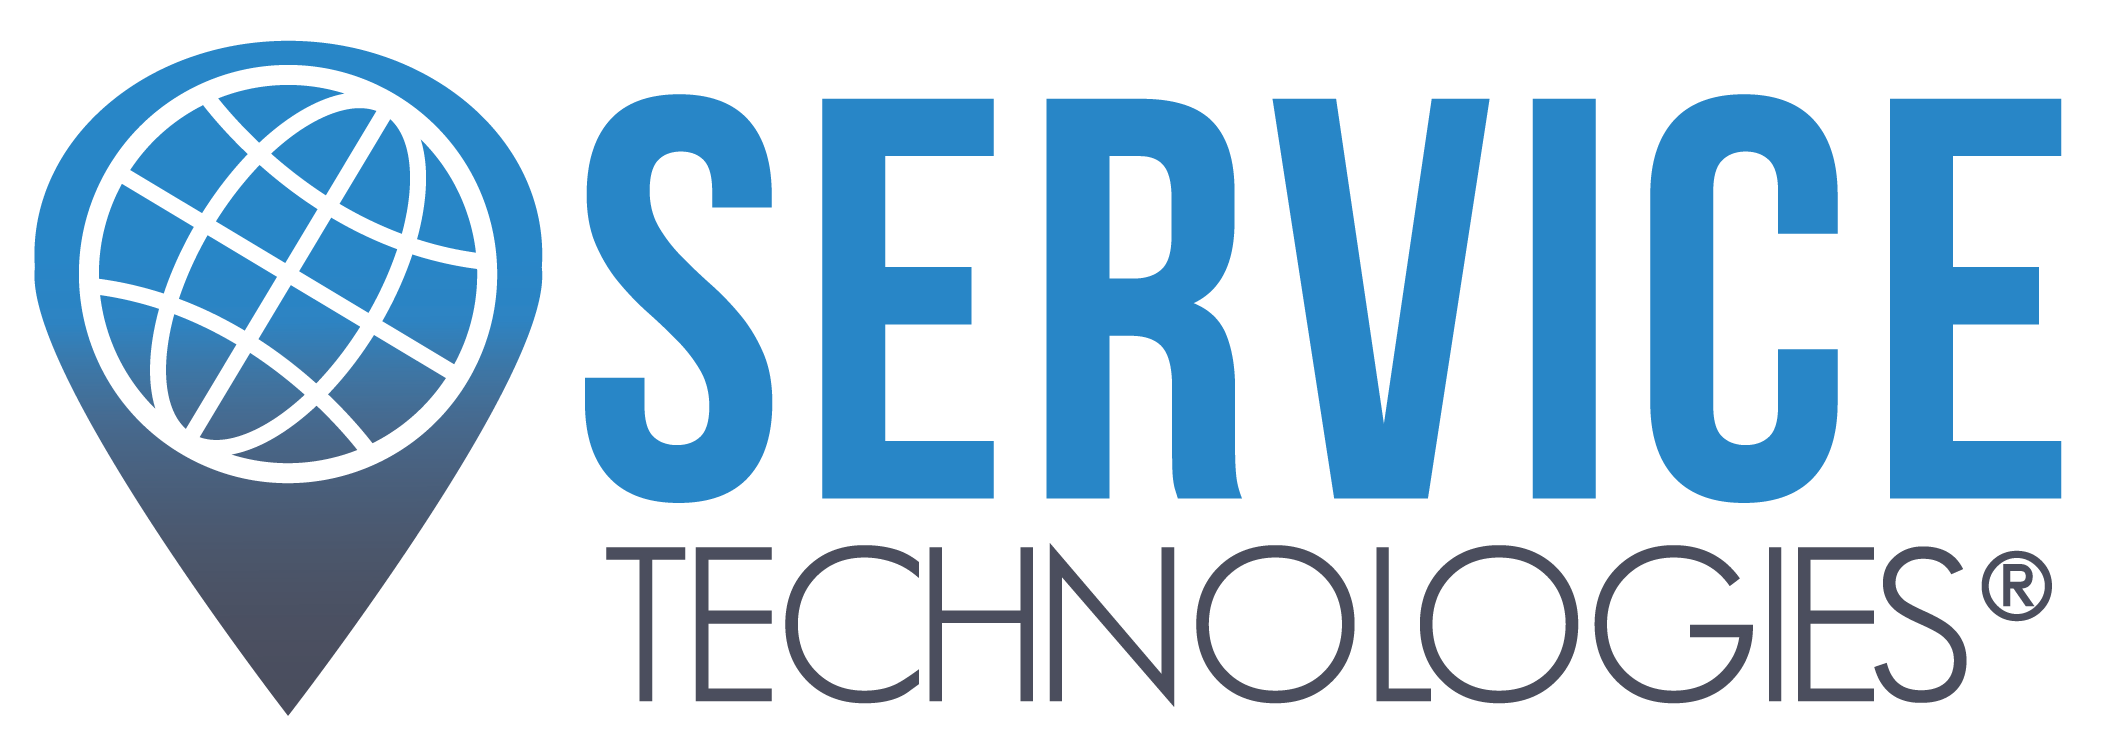 Service Technologies